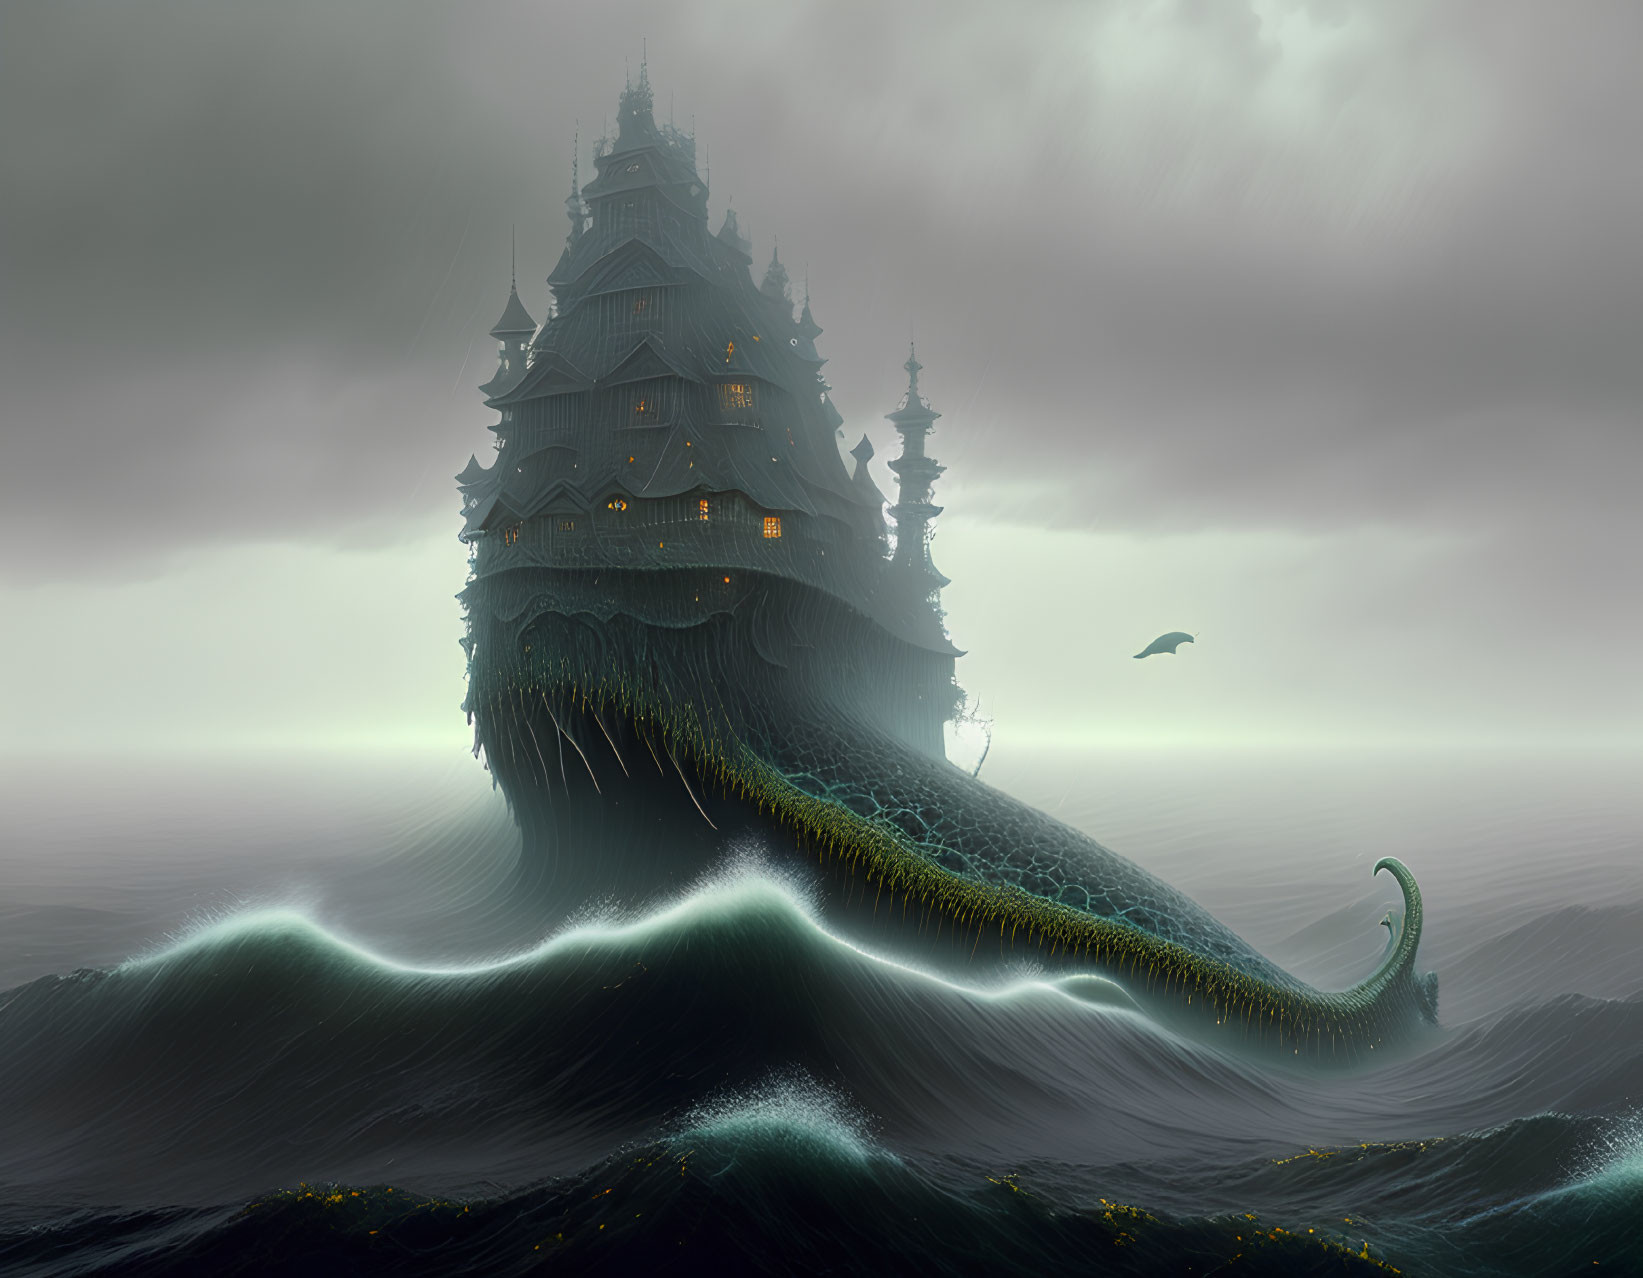 Dark Castle on Sea Creature in Stormy Ocean Scene